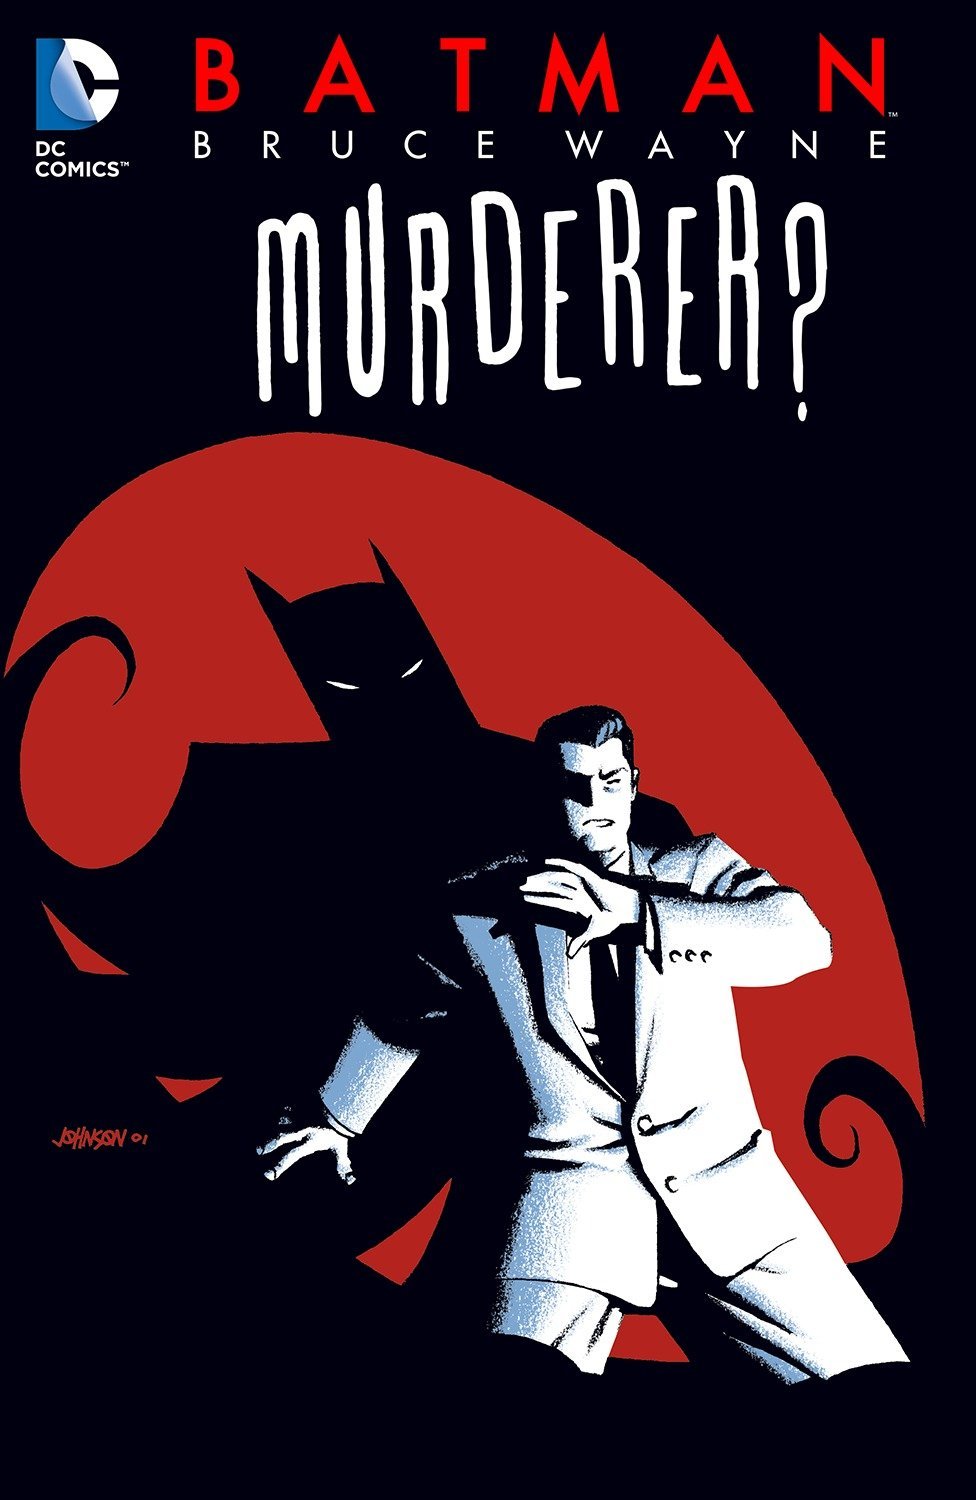 Batman: Bruce Wayne - Murderer? (New Edition) (Revised)